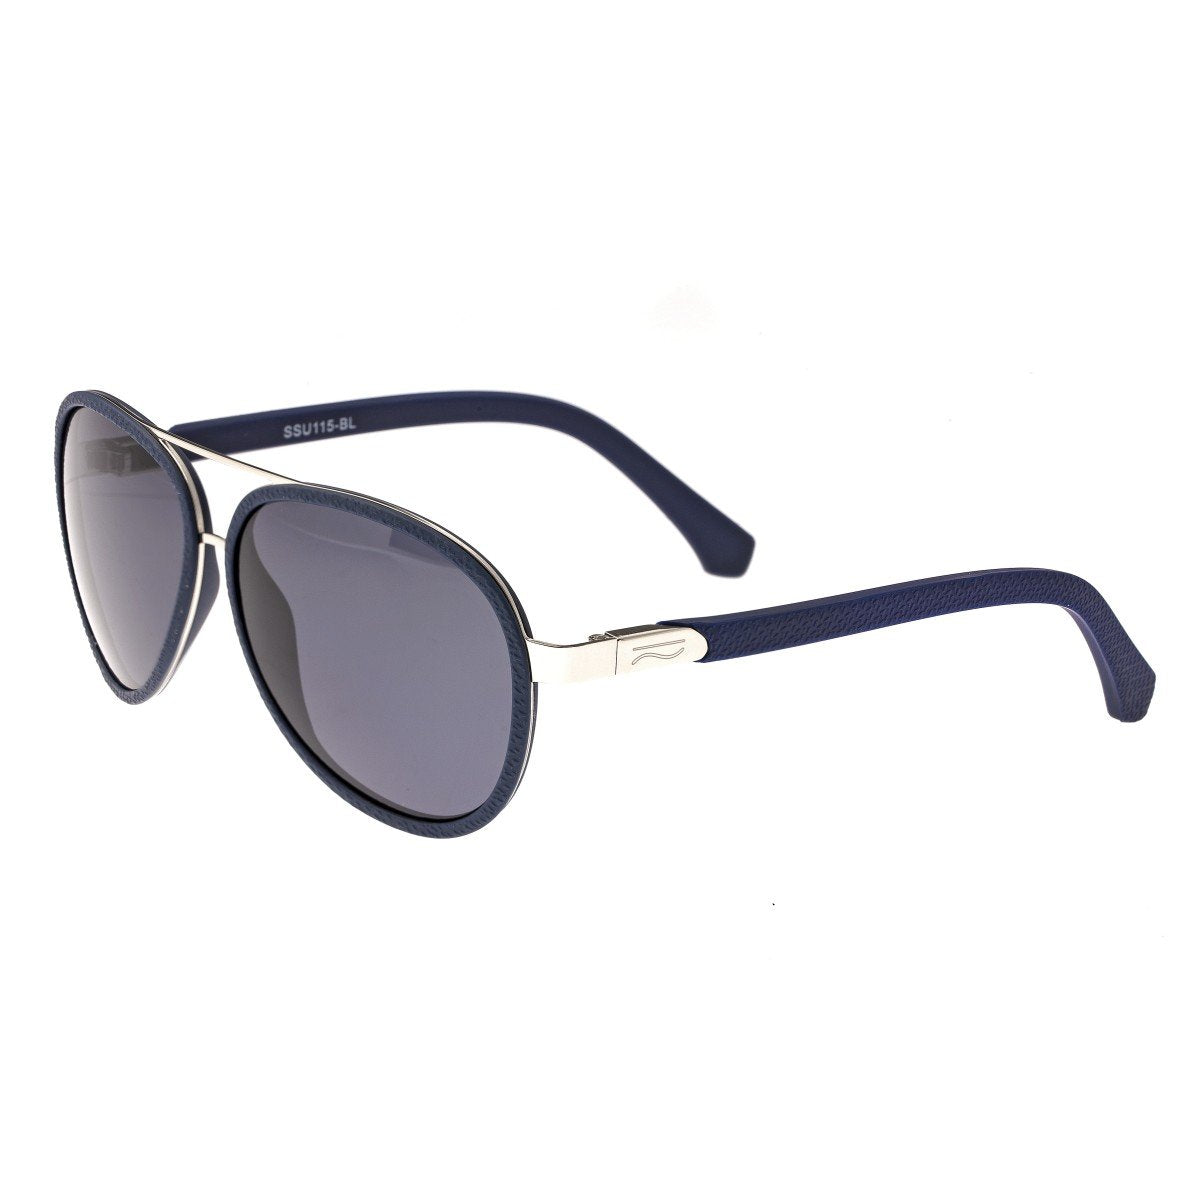 Simplify Stanford Polarized Sunglasses - Silver/Black - SSU115-BL